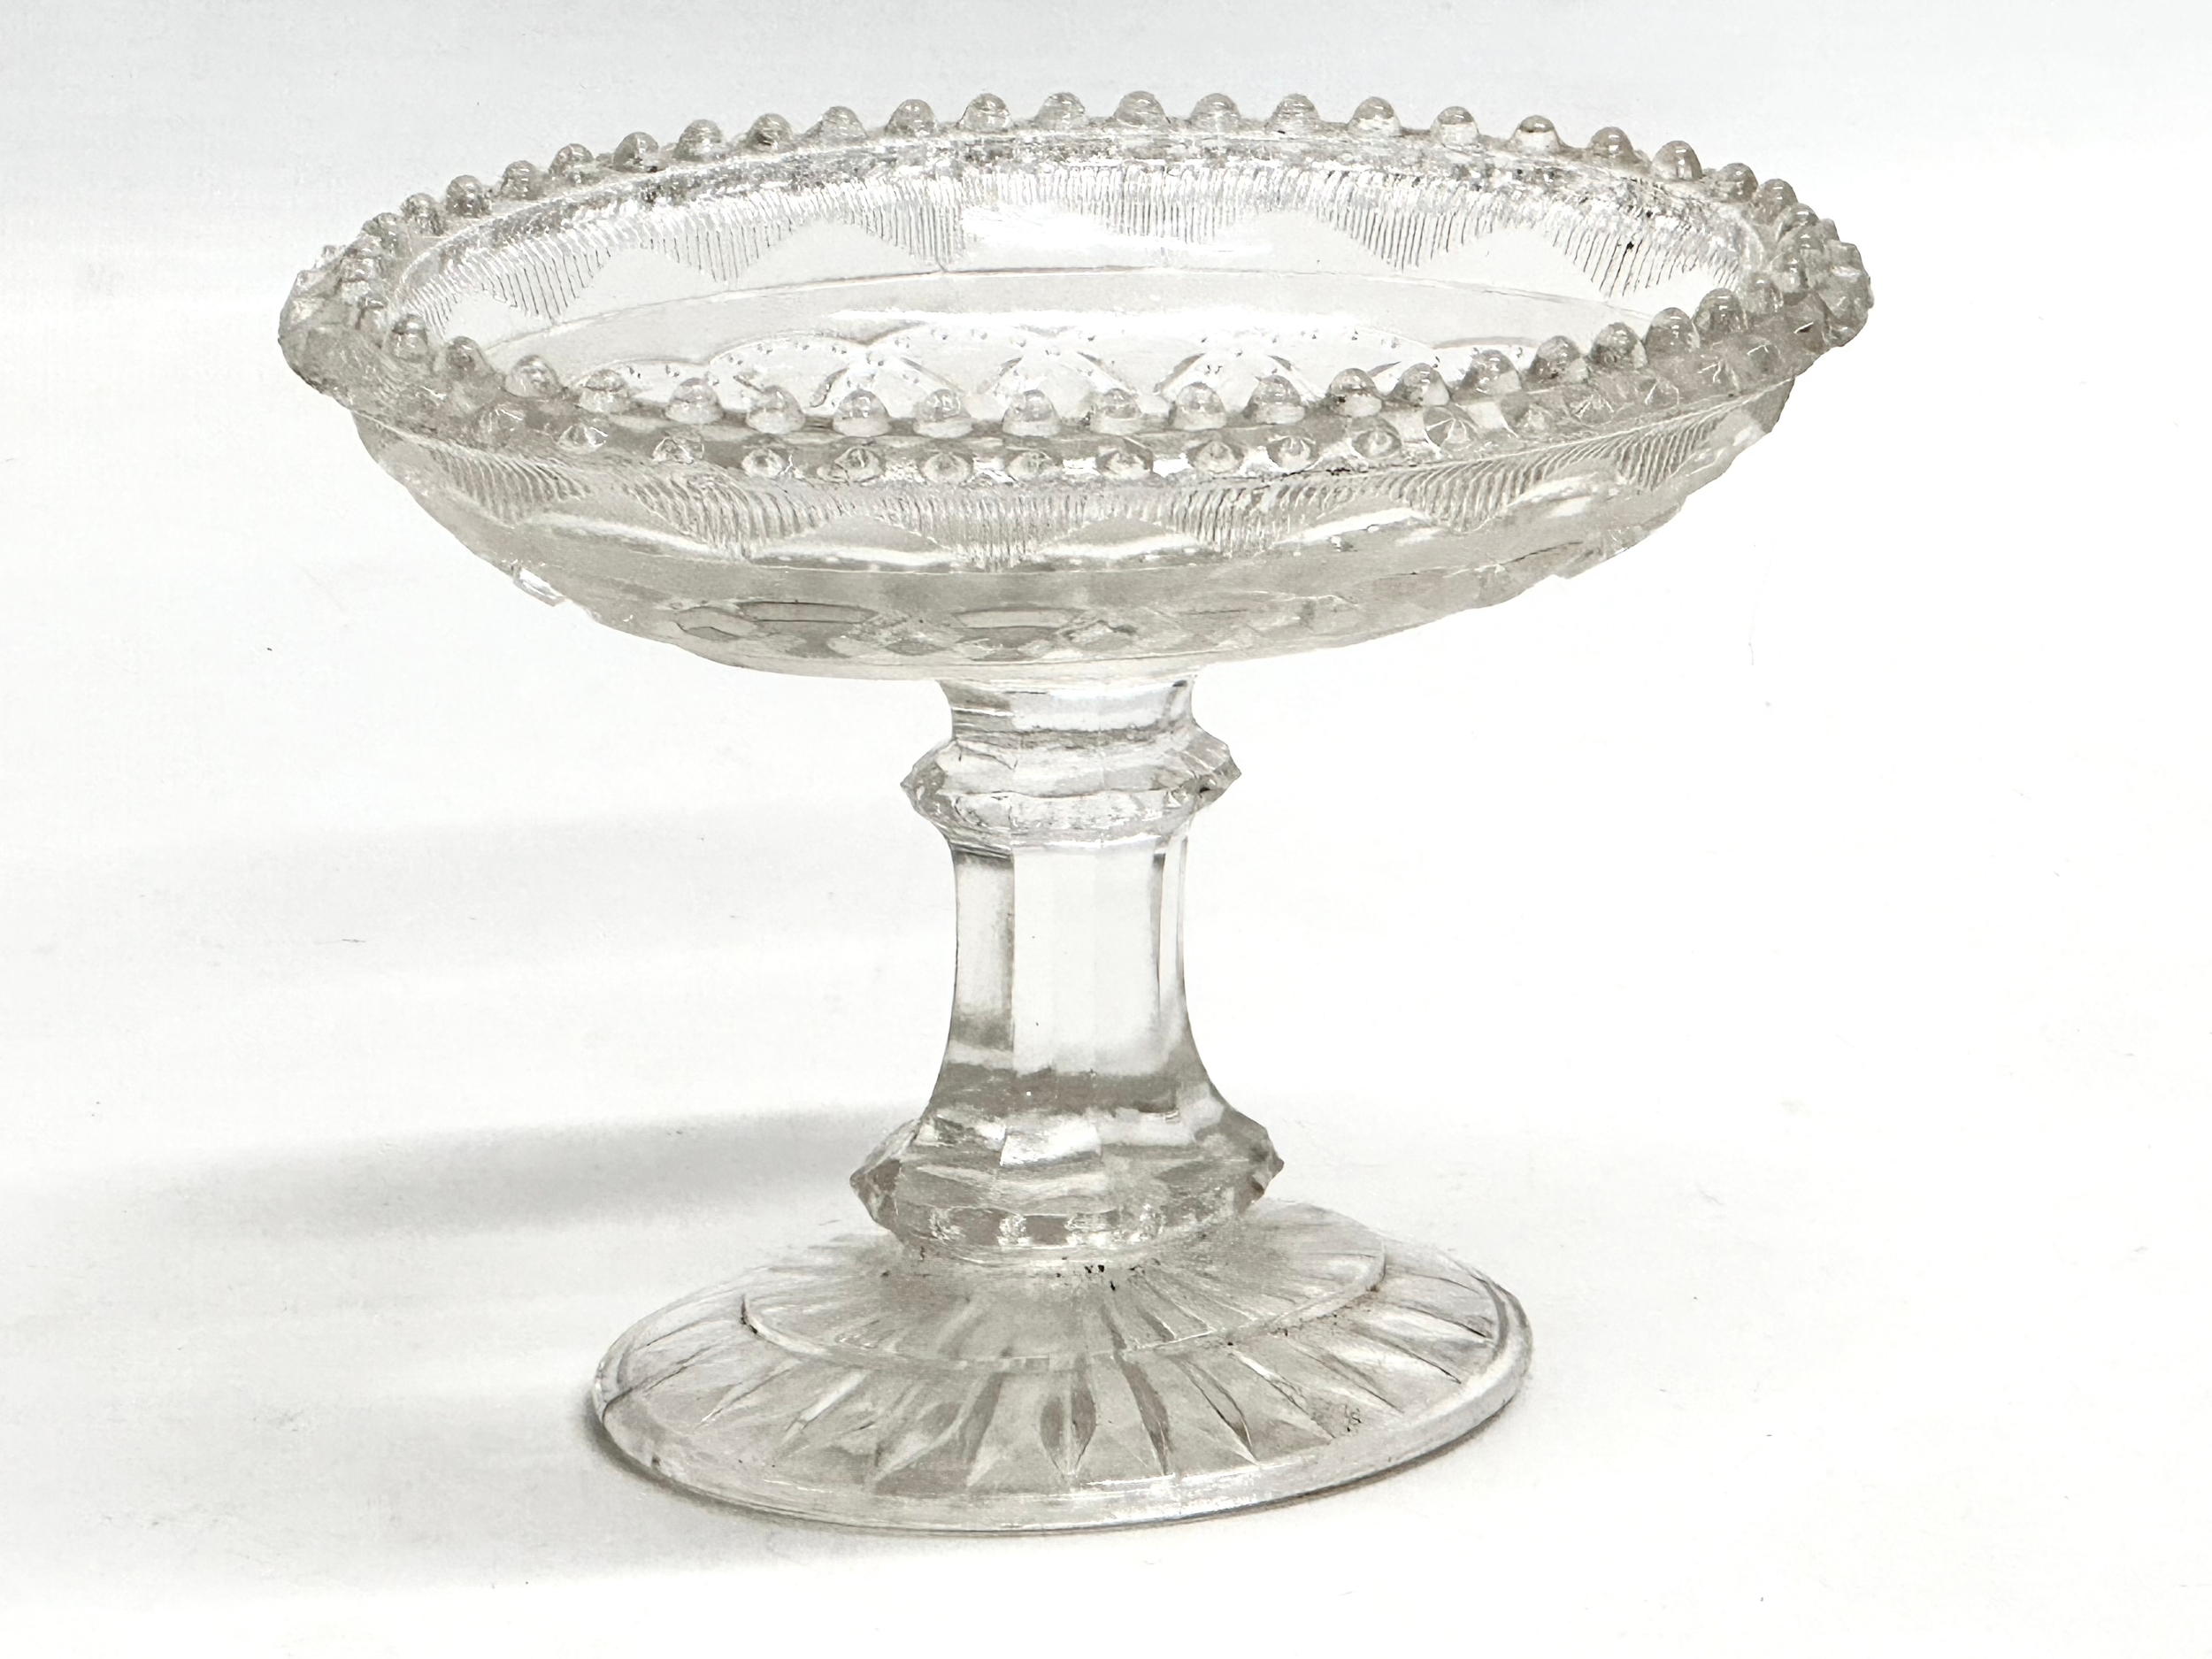 A 19th Century Victorian ‘Lozenge’ pressed glass comport with lemon squeezer base. Circa 1860-